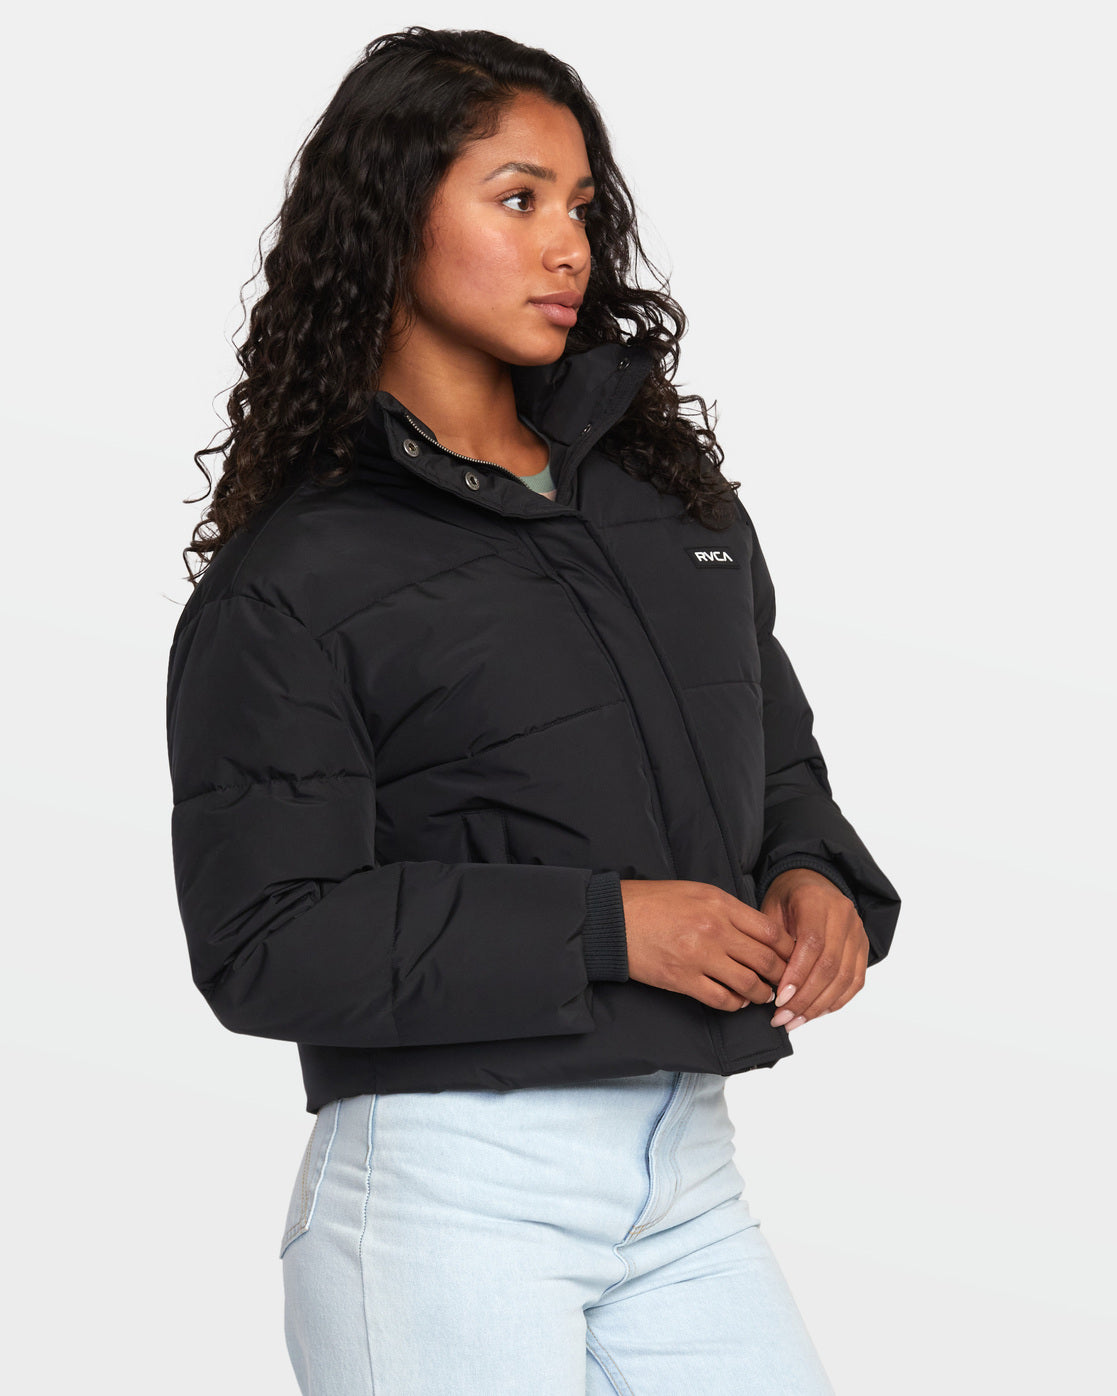 CALIA Women's Bubble Cloud Zip Up Jacket, Pure Black, Size Medium